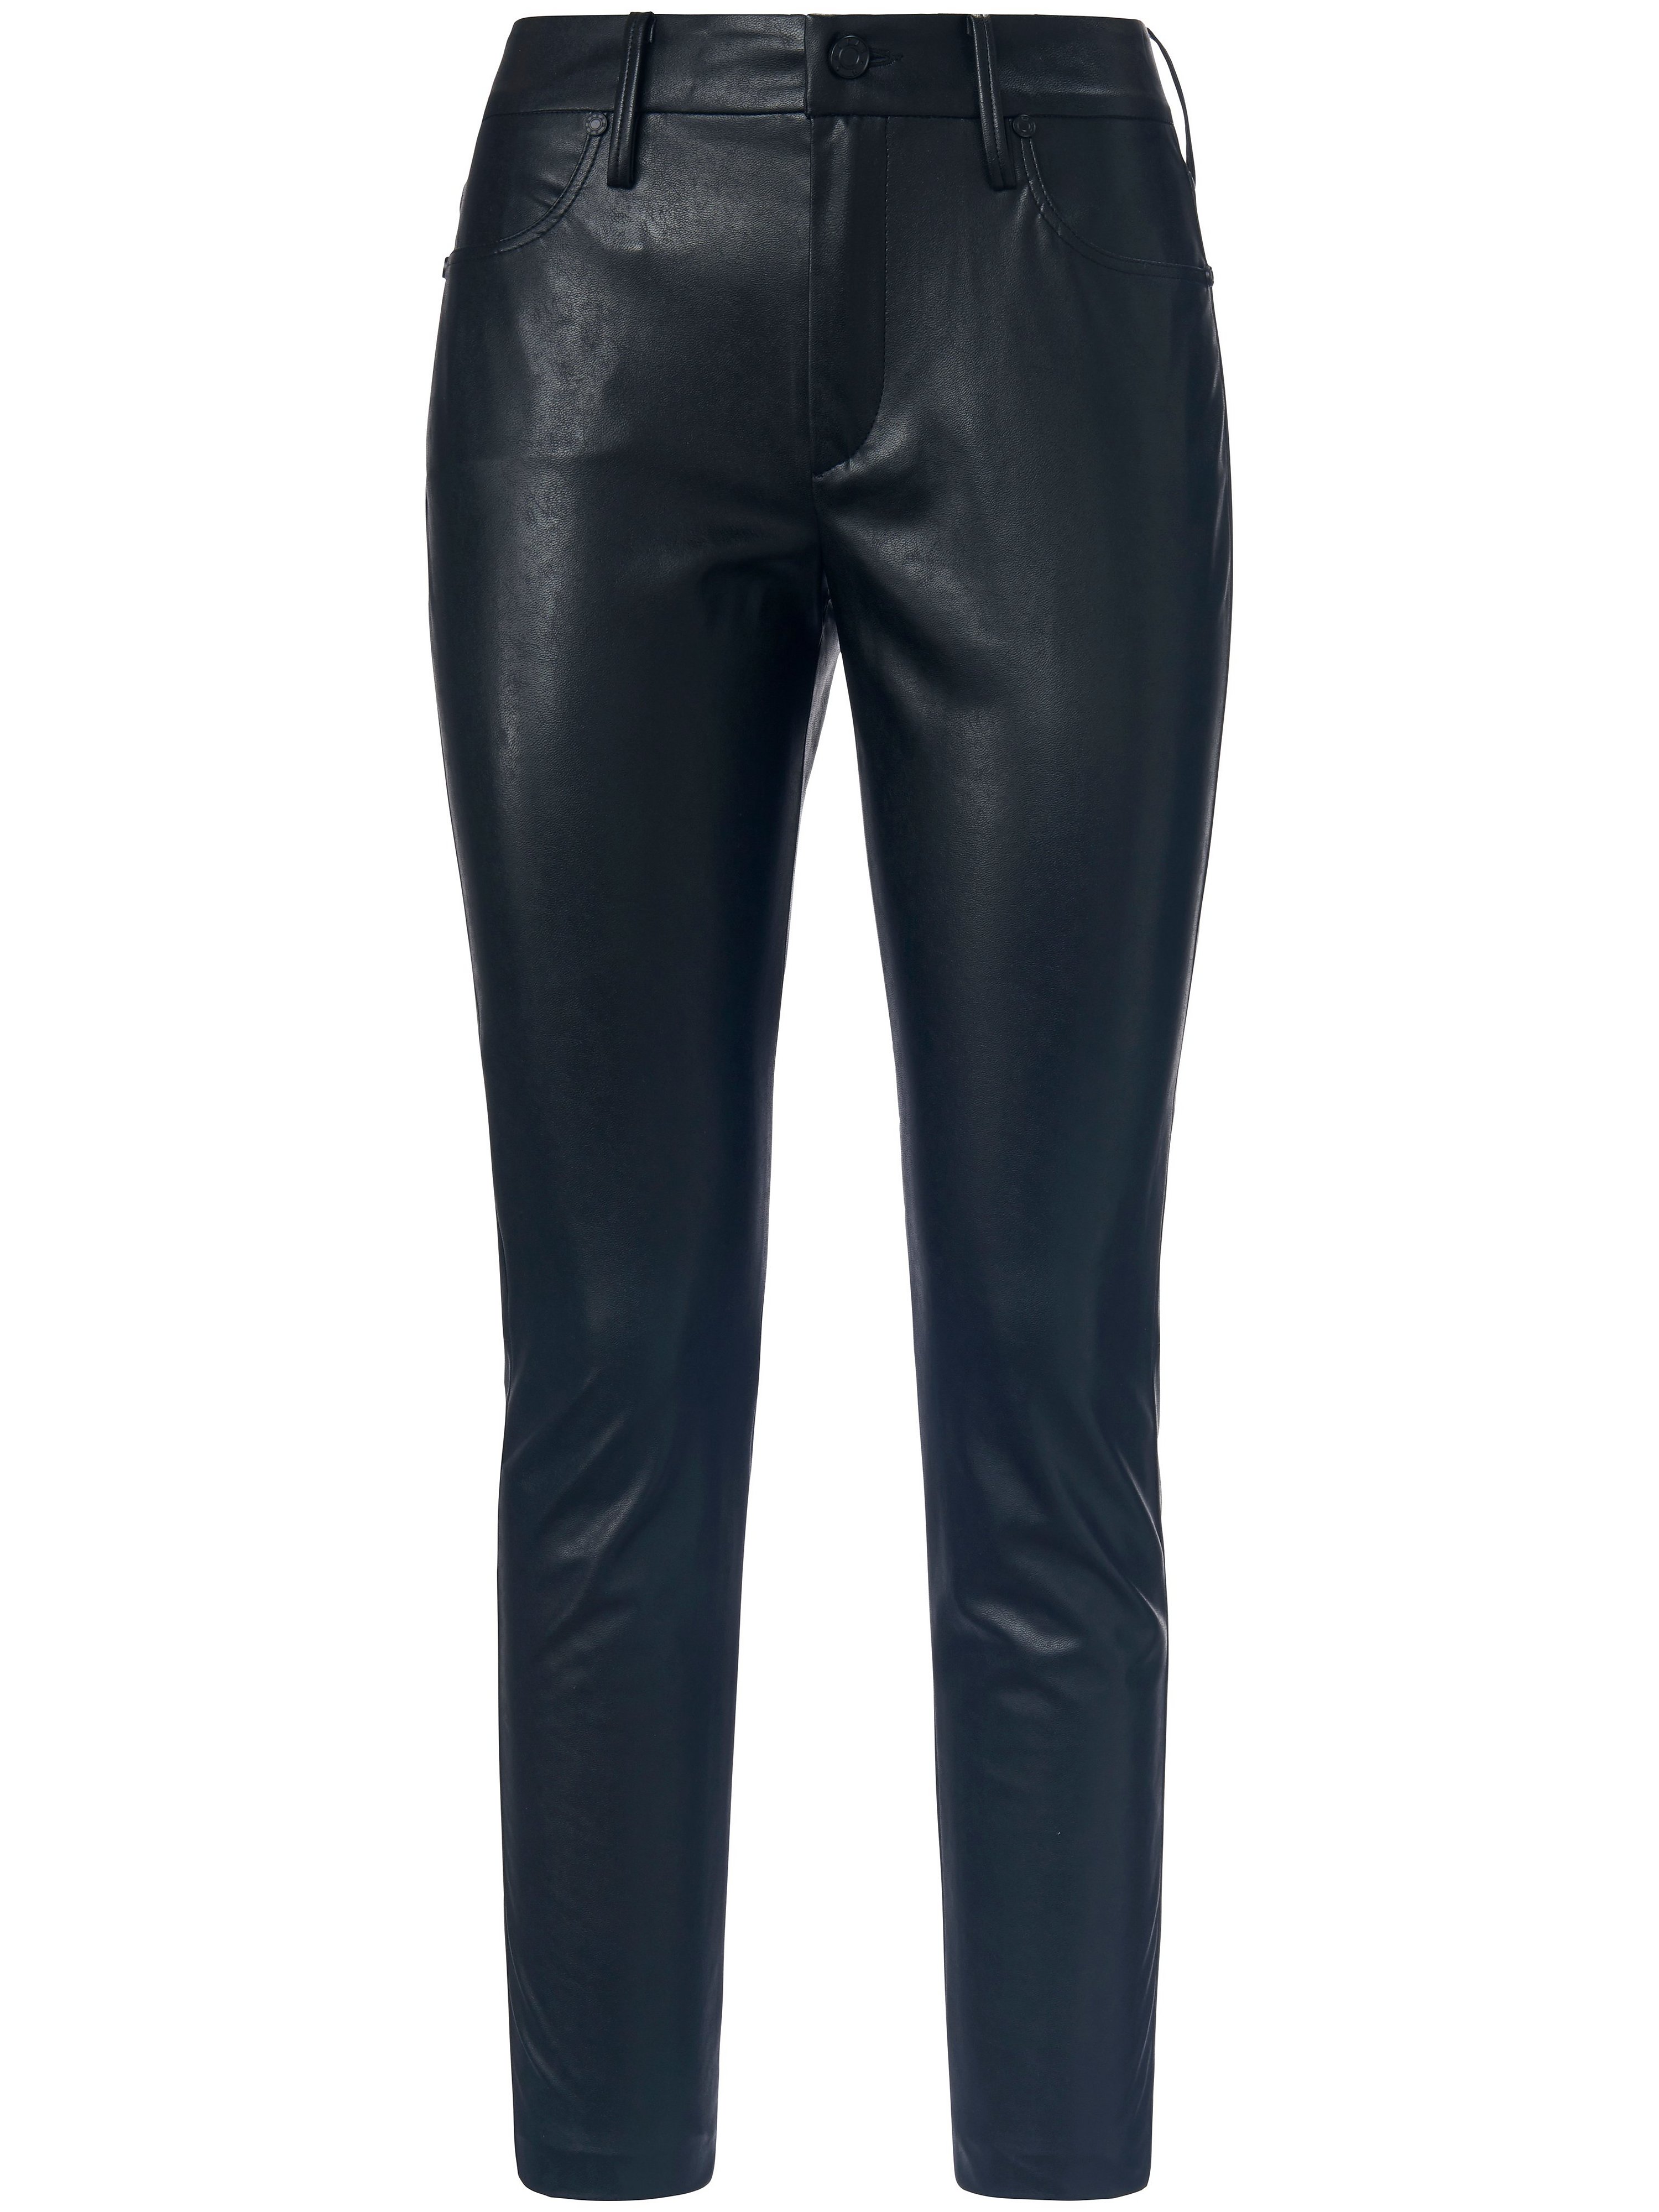 Le pantalon  MAC DAYDREAM noir